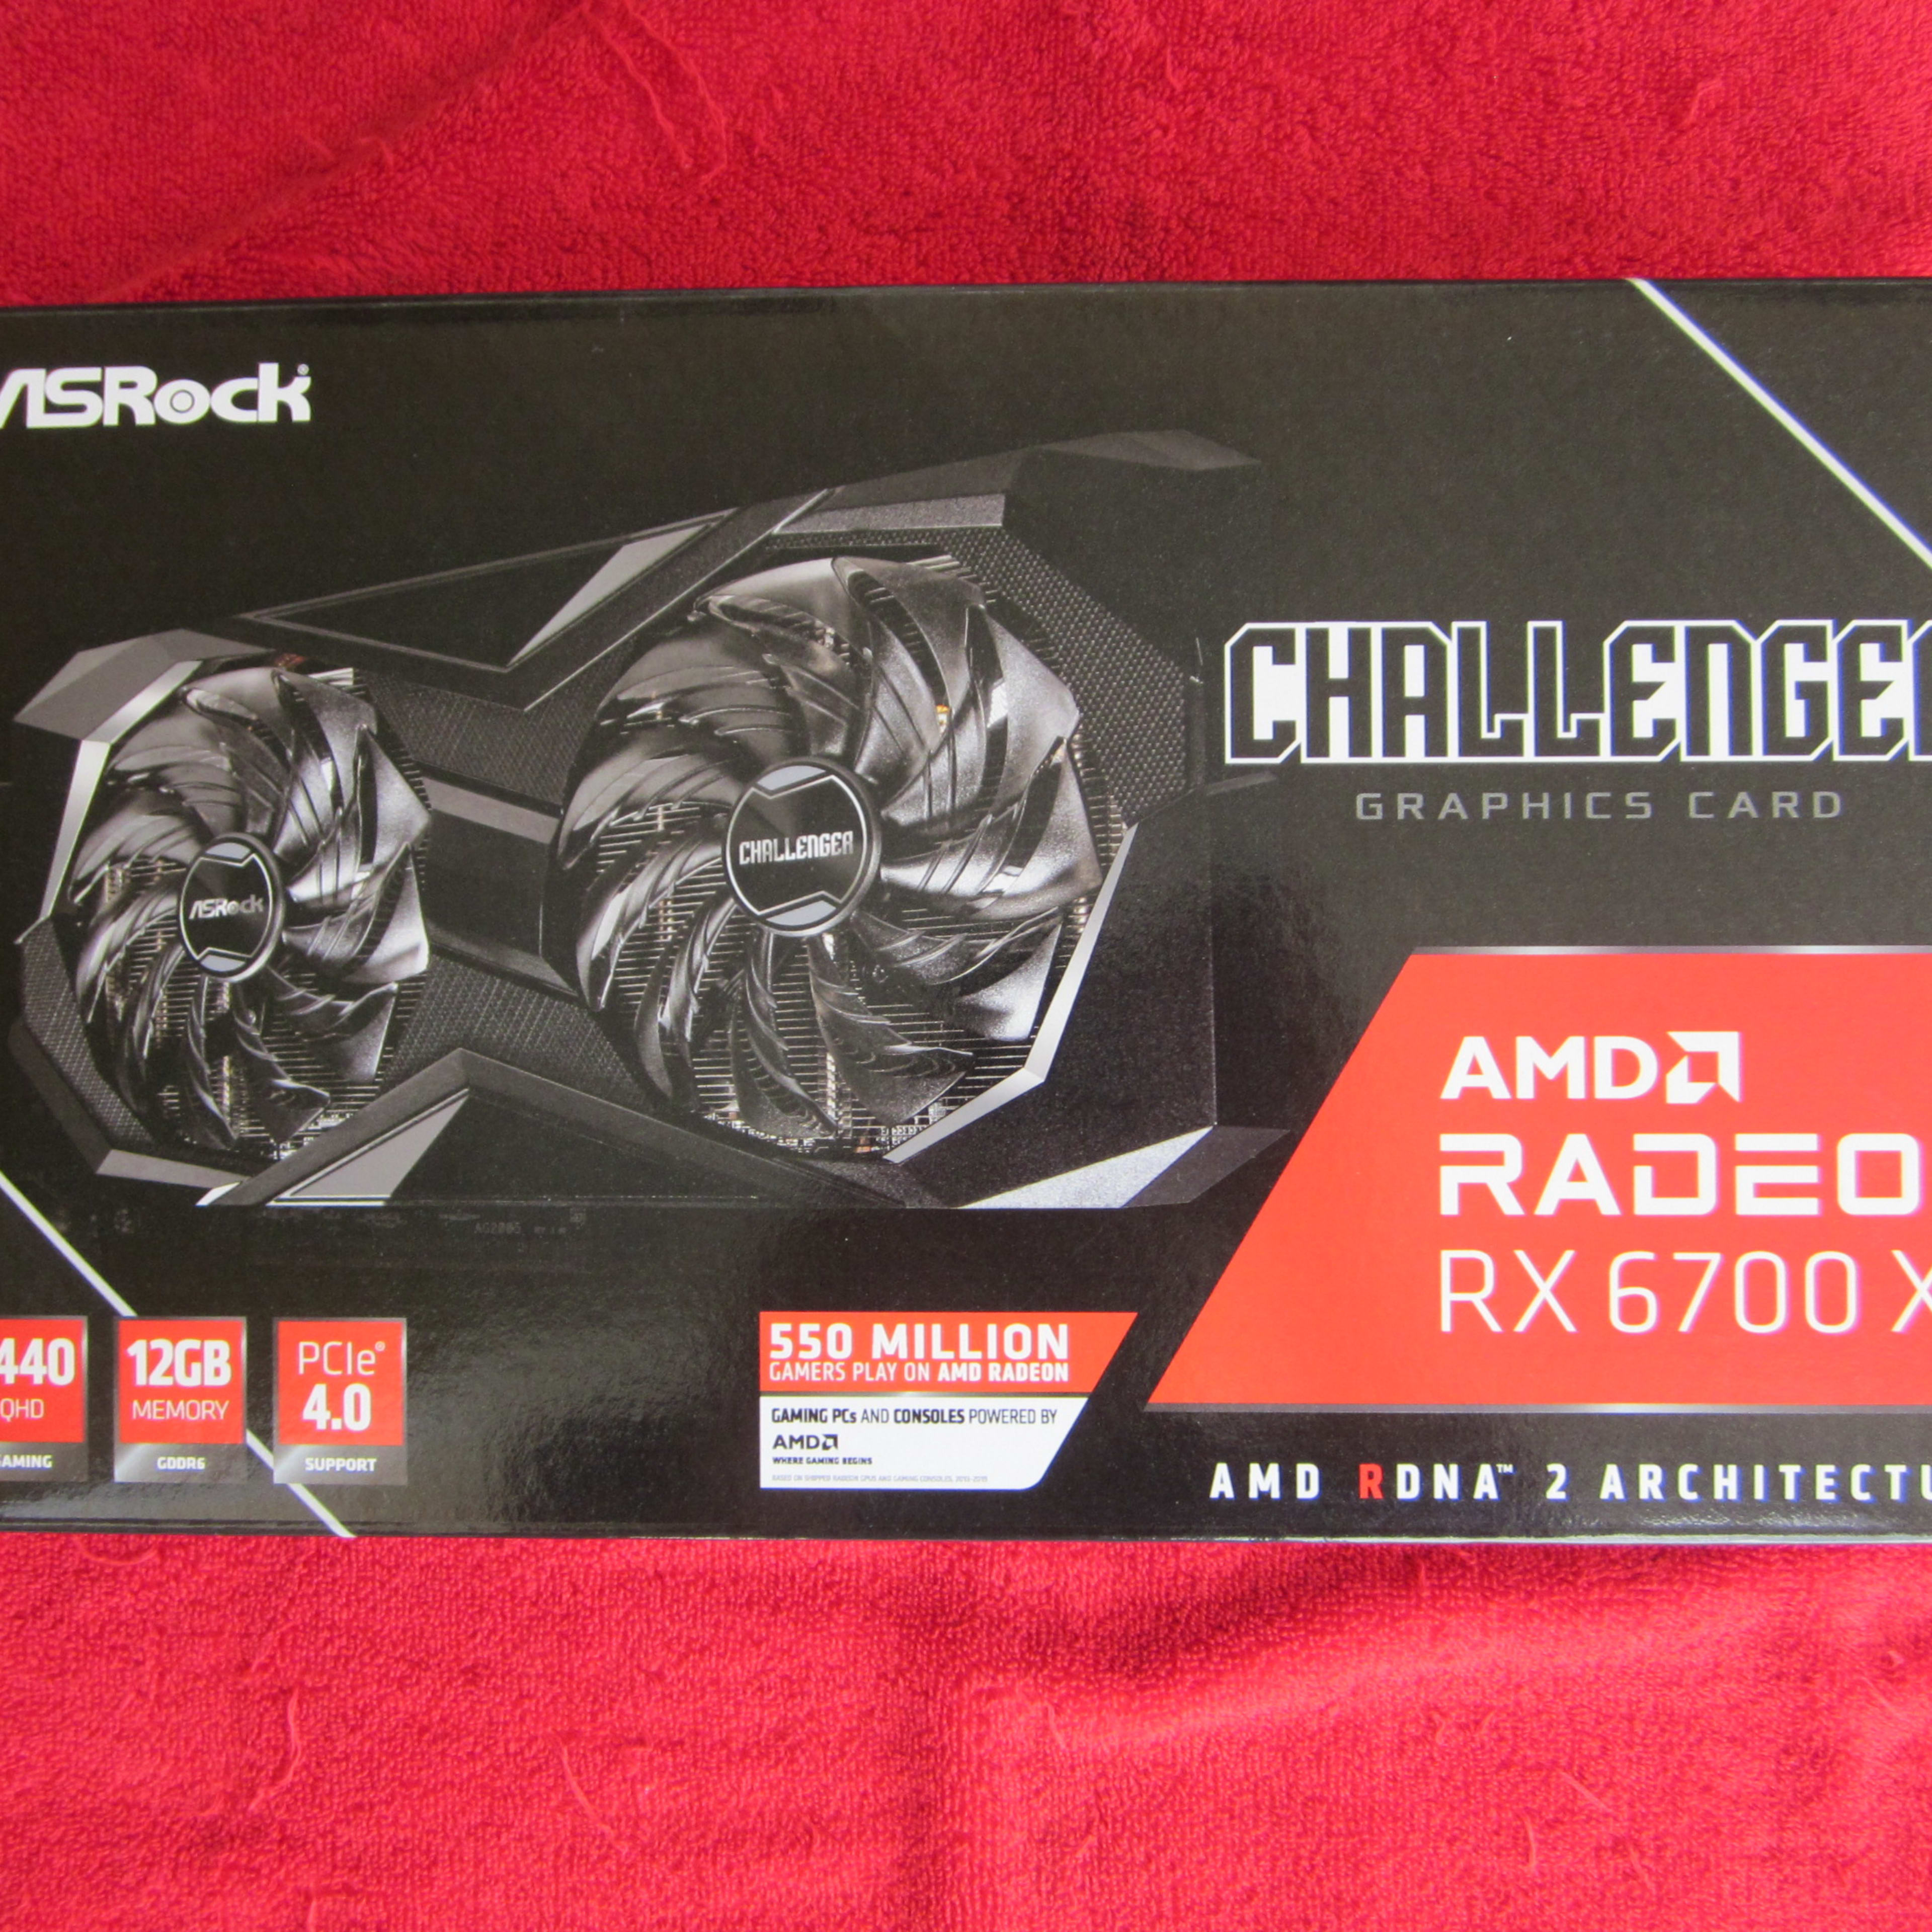 NEW! ASRock Challenger AMD Radeon RX 6700 XT GDDR6 12GB  Gaming Graphics Card